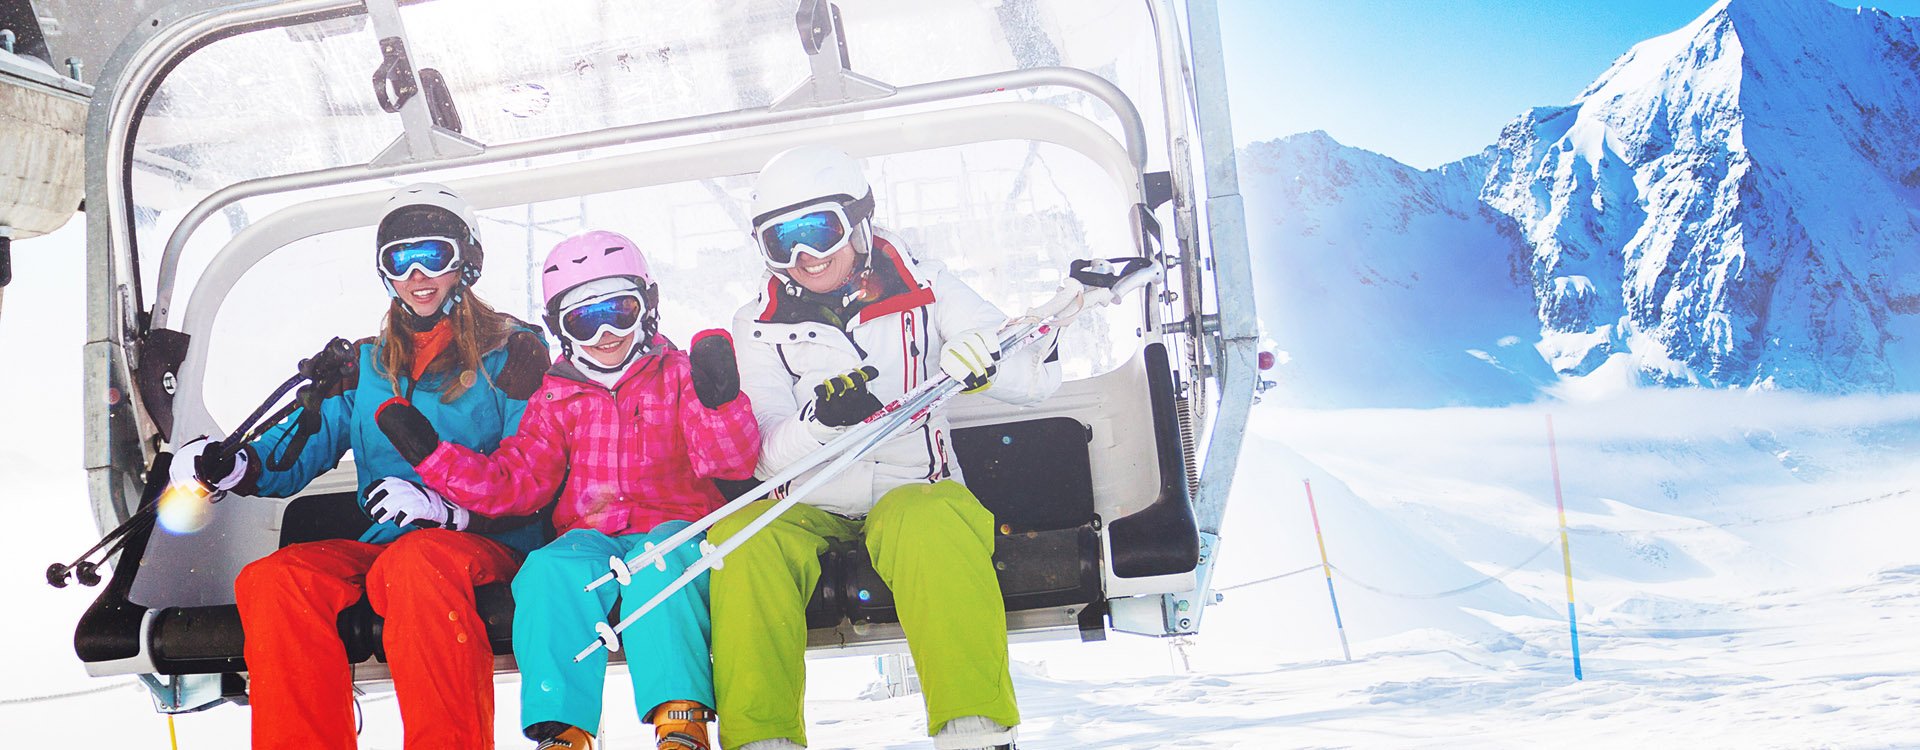 Winter - ski vacation - family on ski lift 